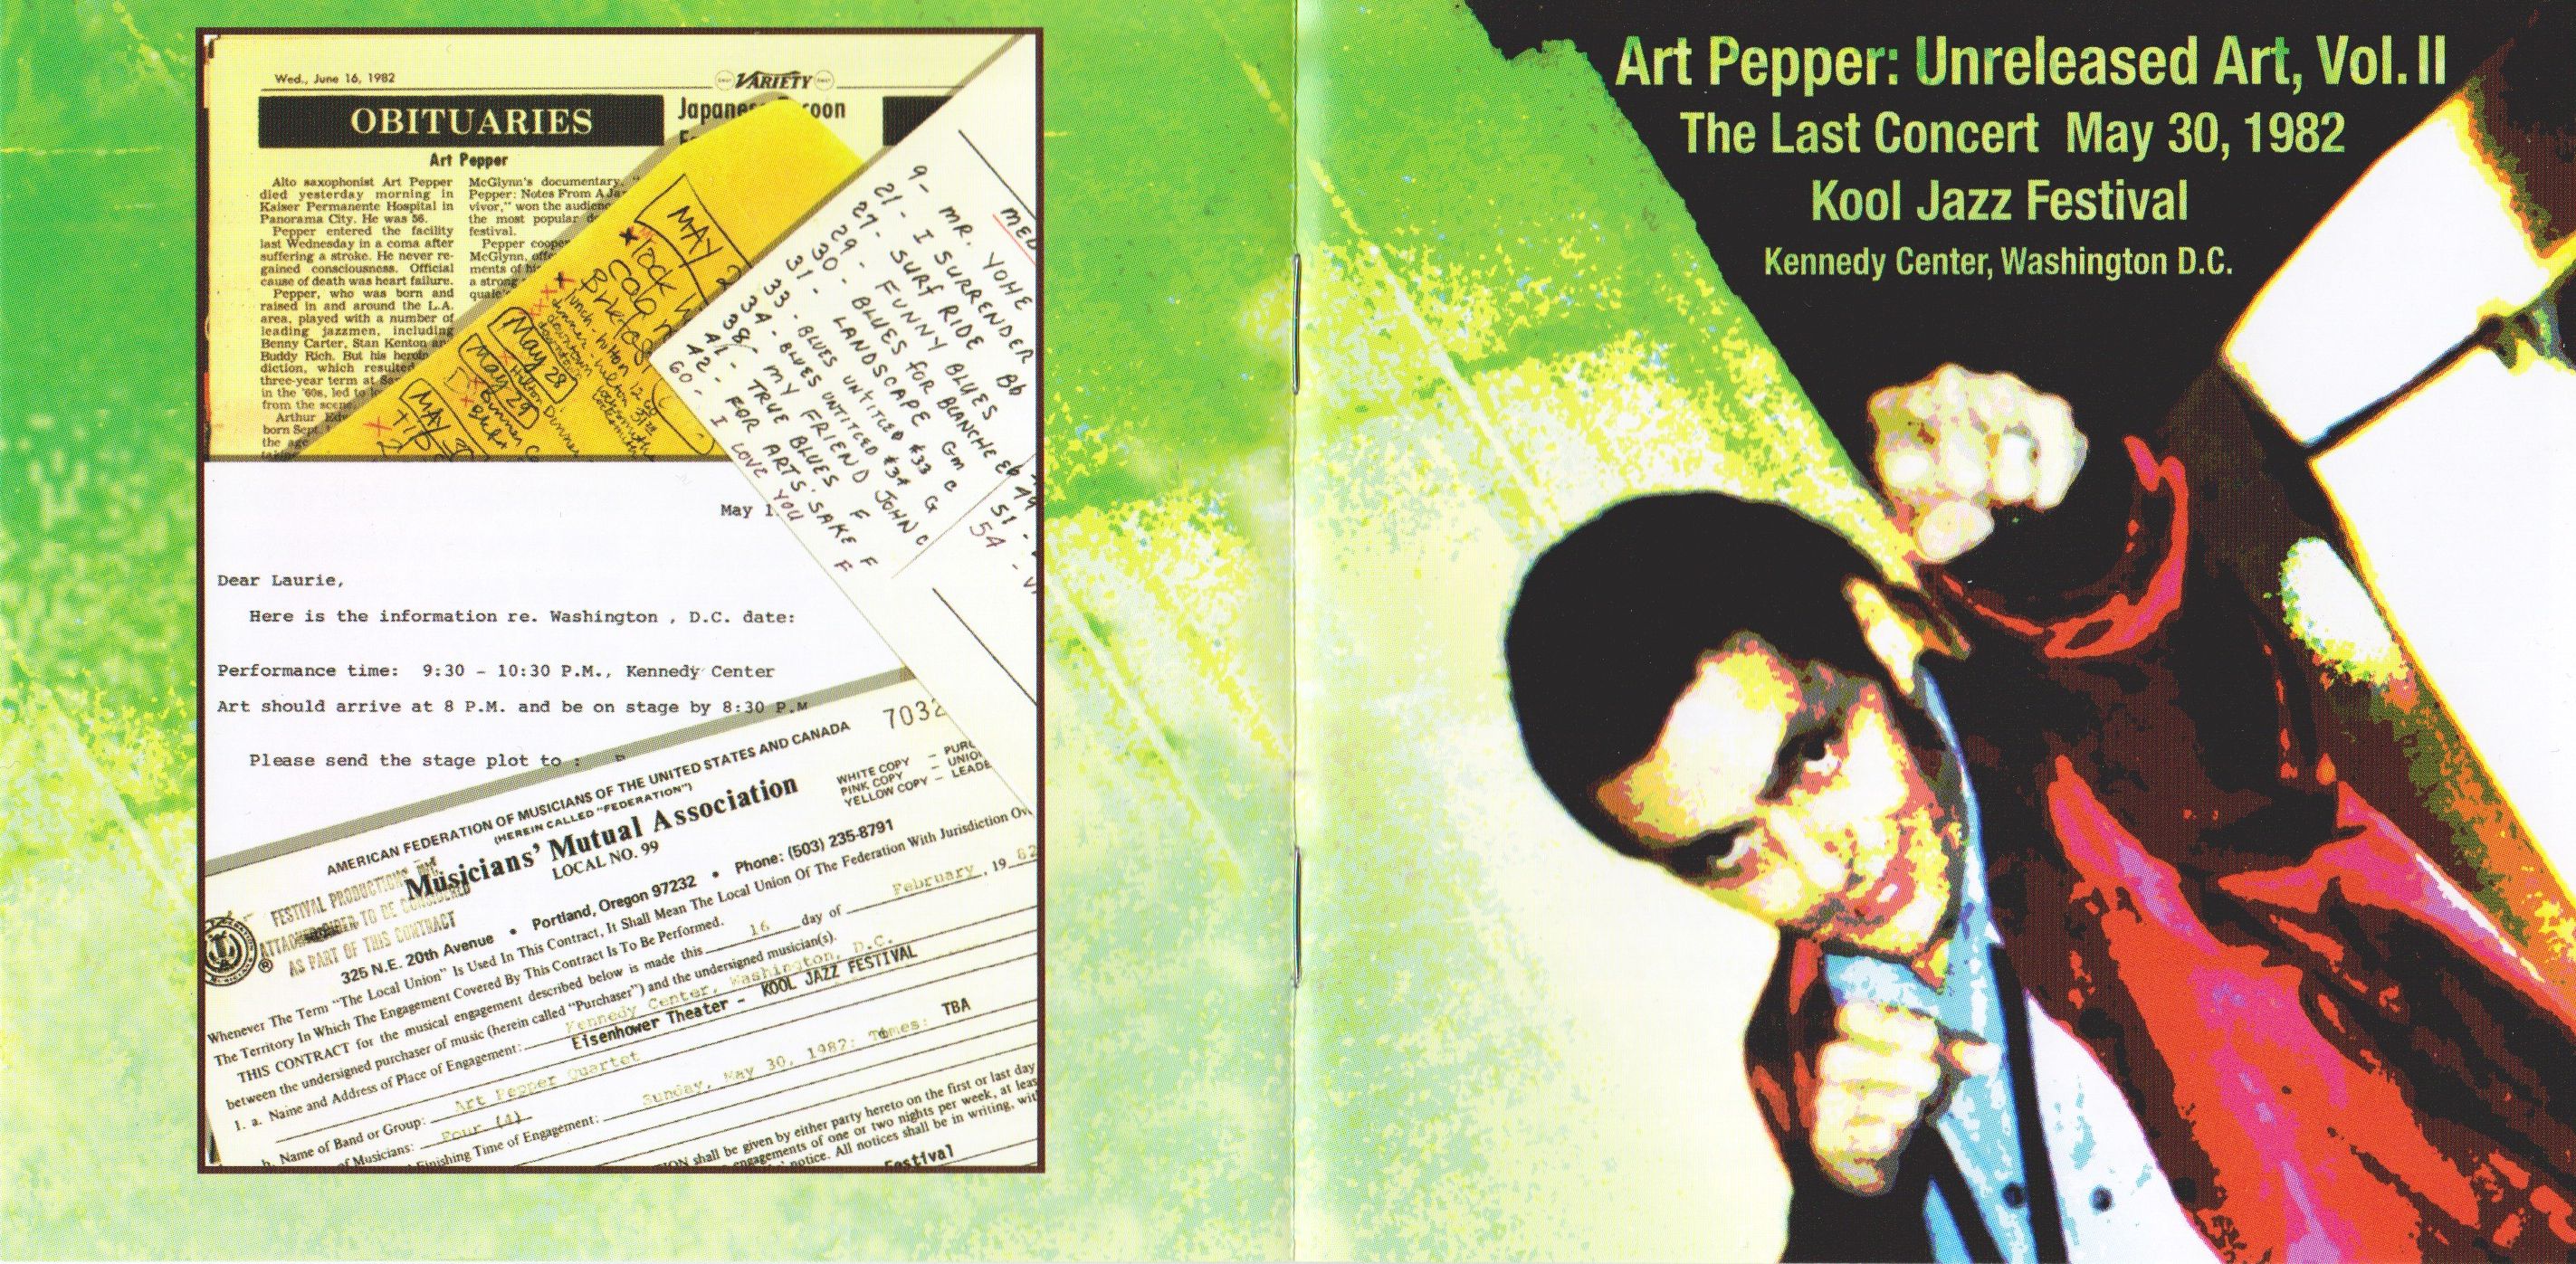 Art Pepper Unreleased Art Vol 2 The Last Concert May 30, 1982